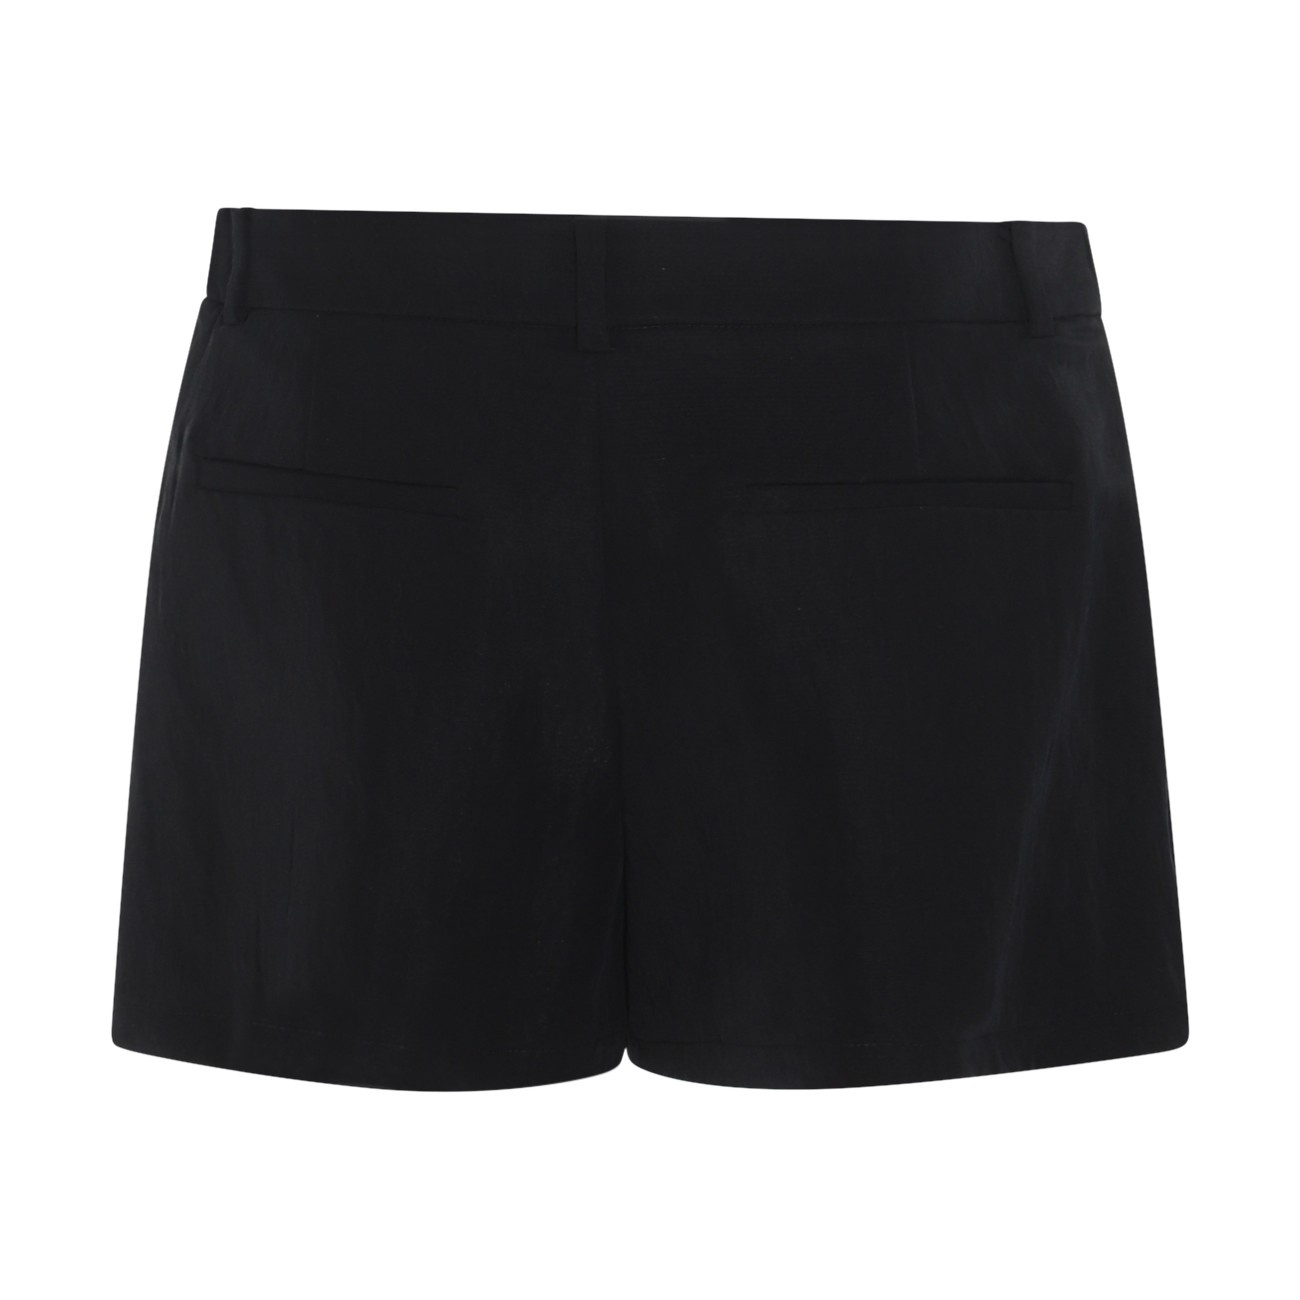 black shorts - 2